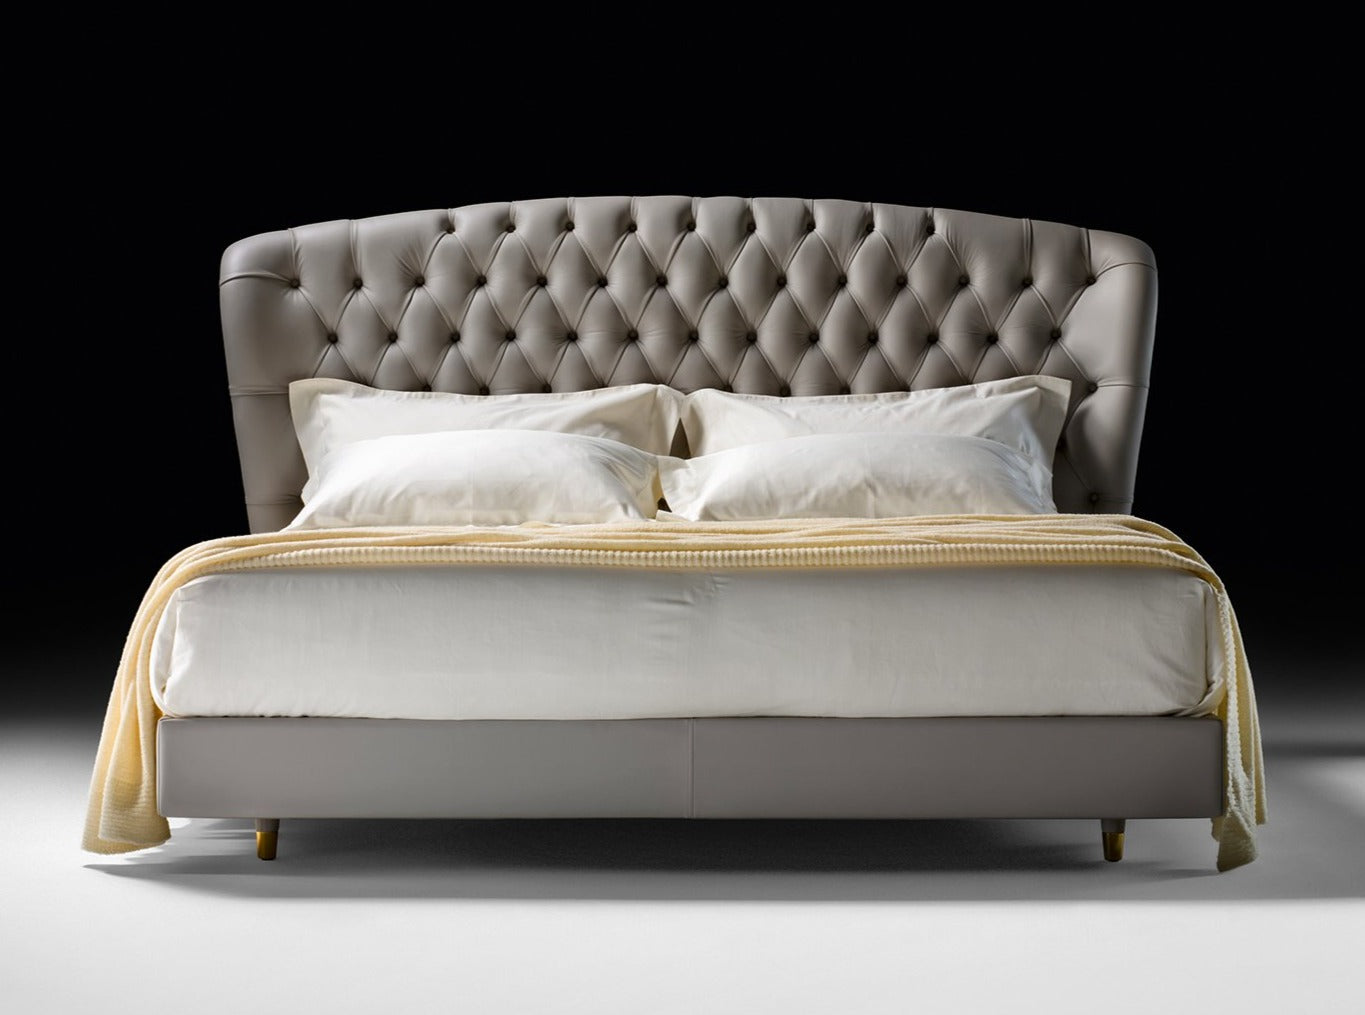 Savoi Designer Leatherette Double Bed